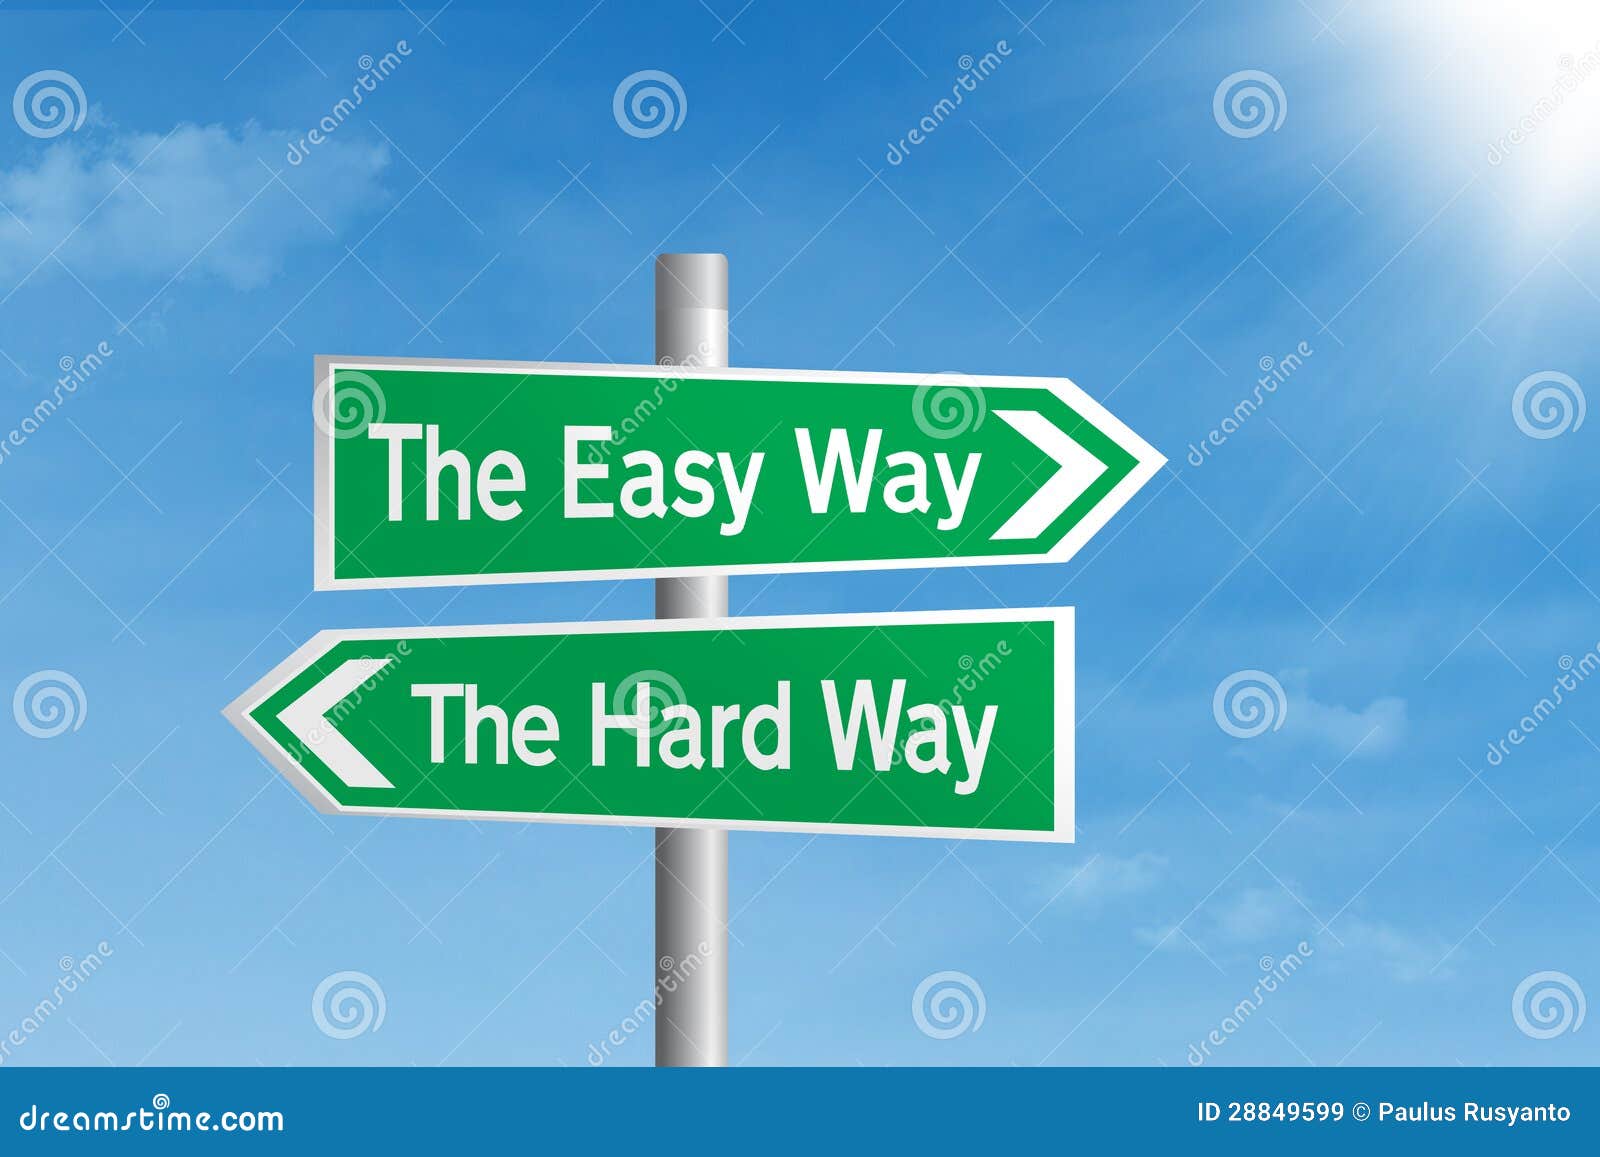 easy vs hard way road sign